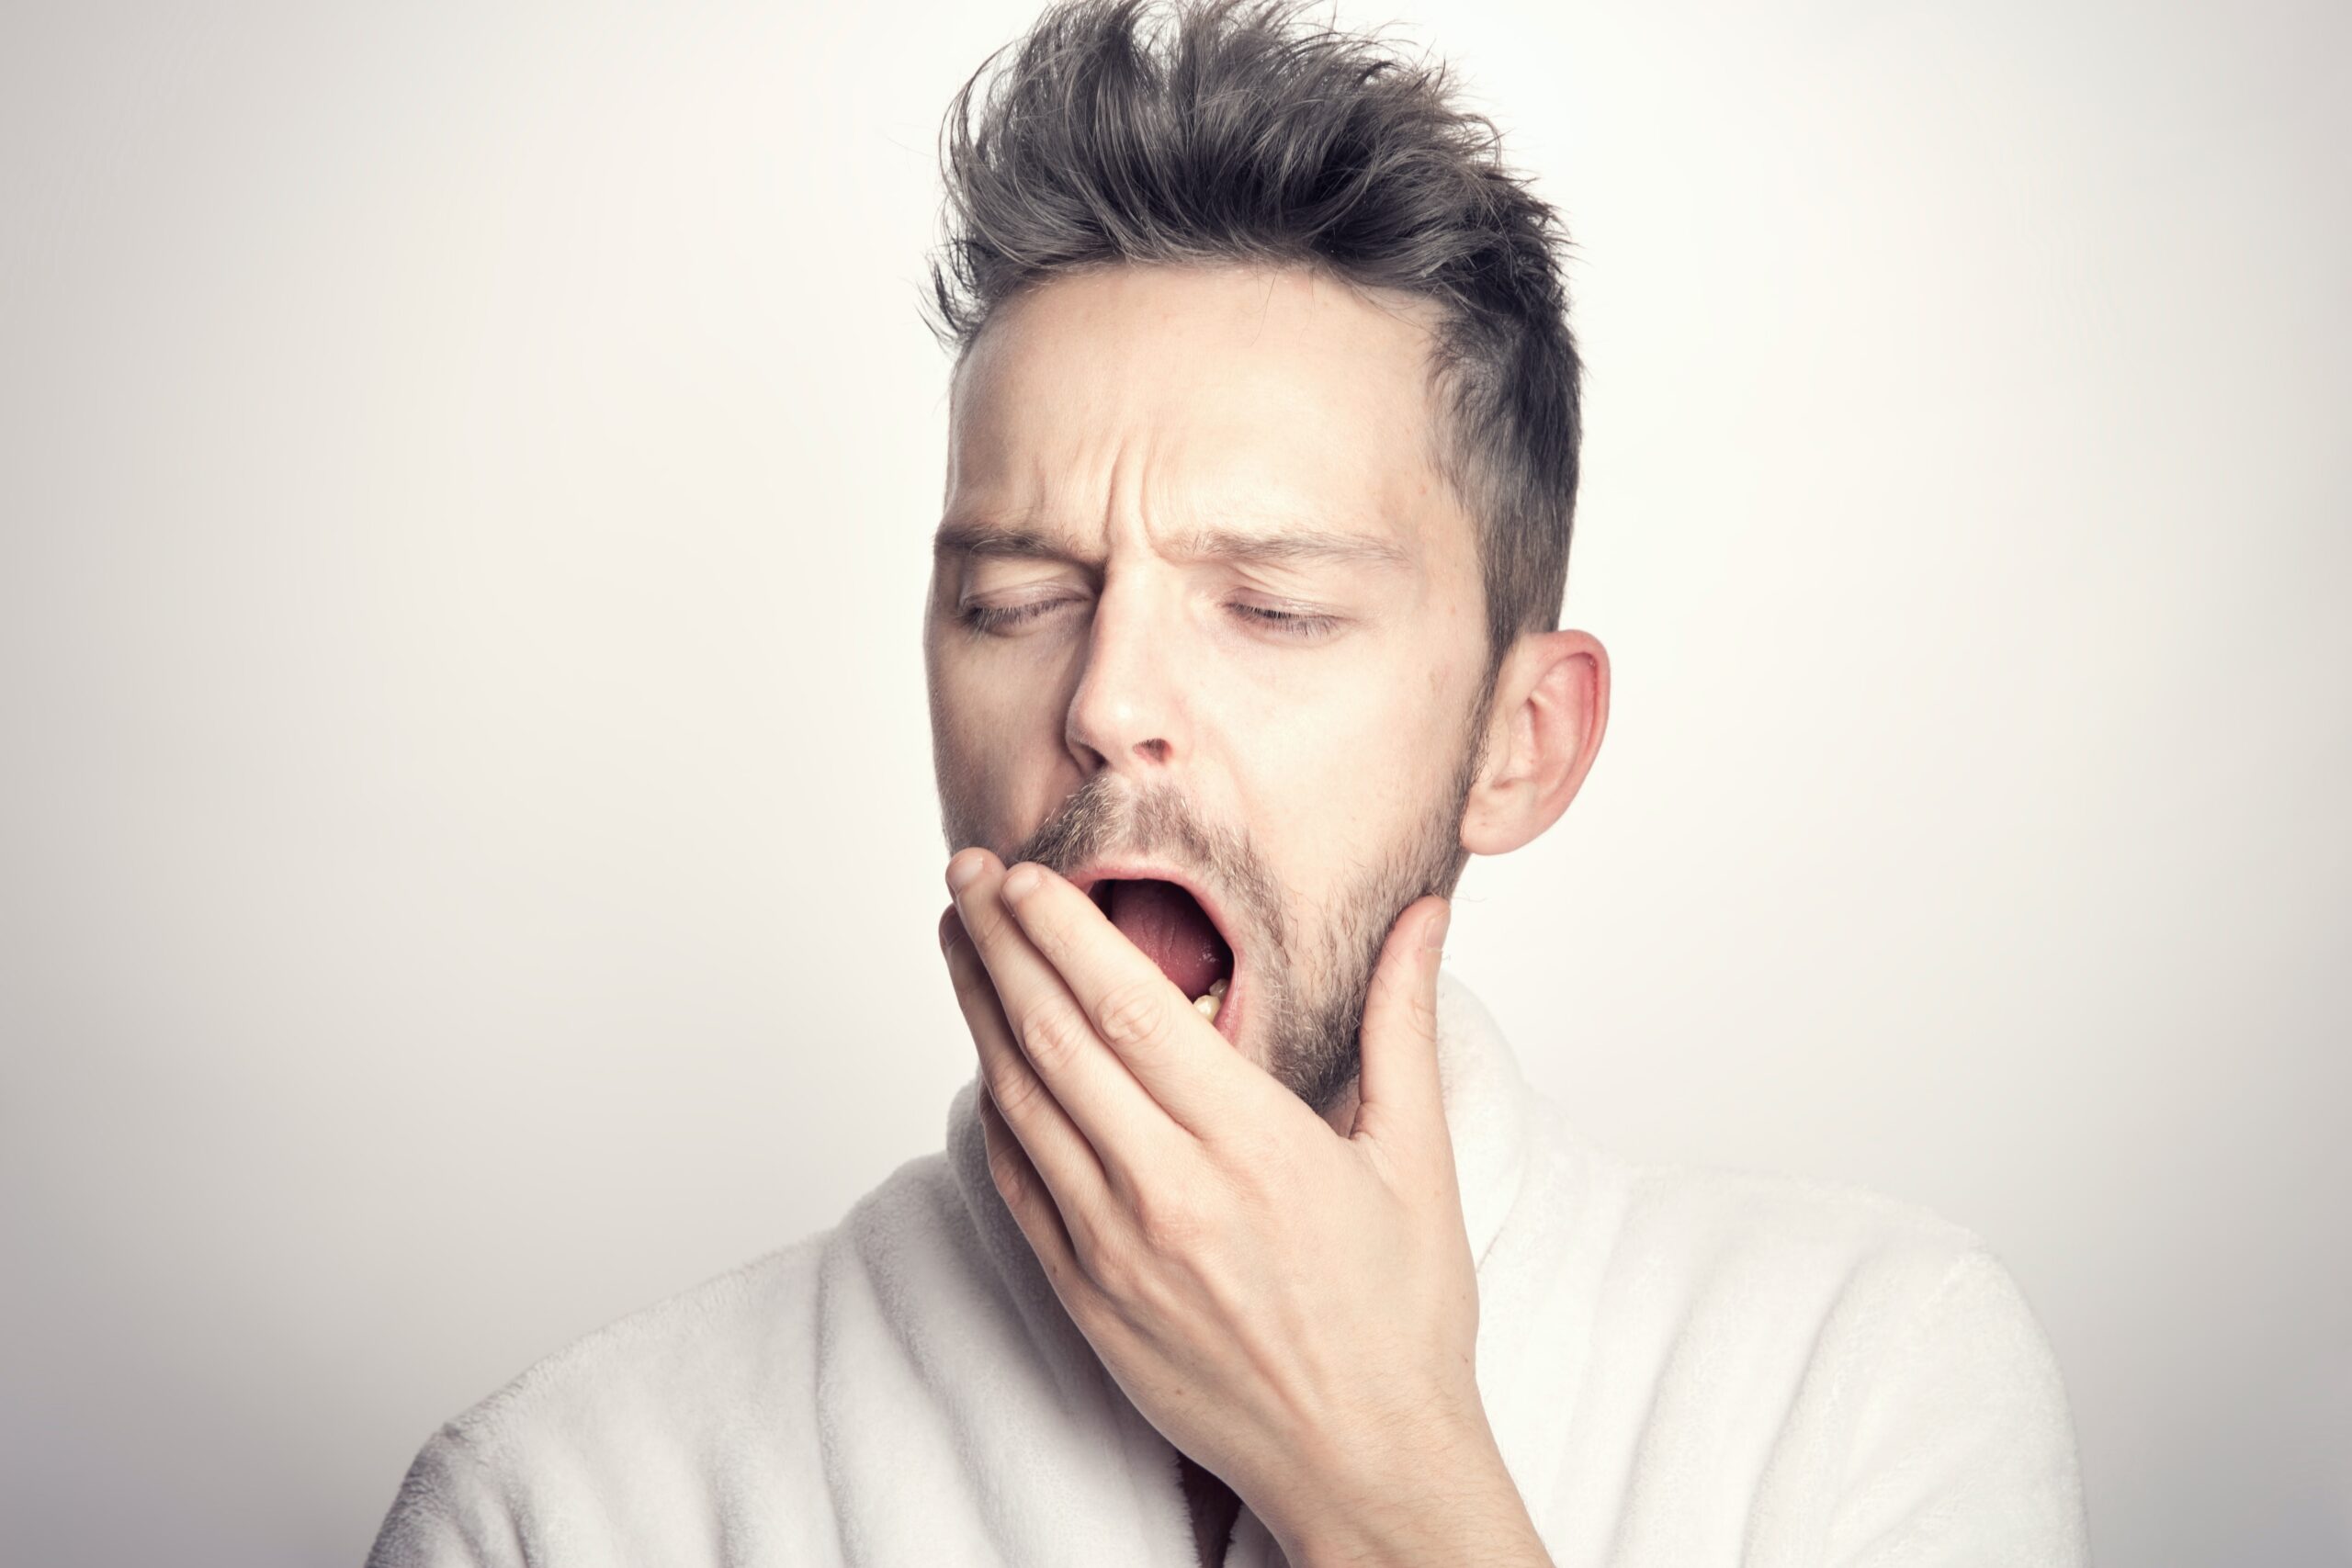 “Can snoring cause high blood pressure?” & Other Sleep Apnea FAQs